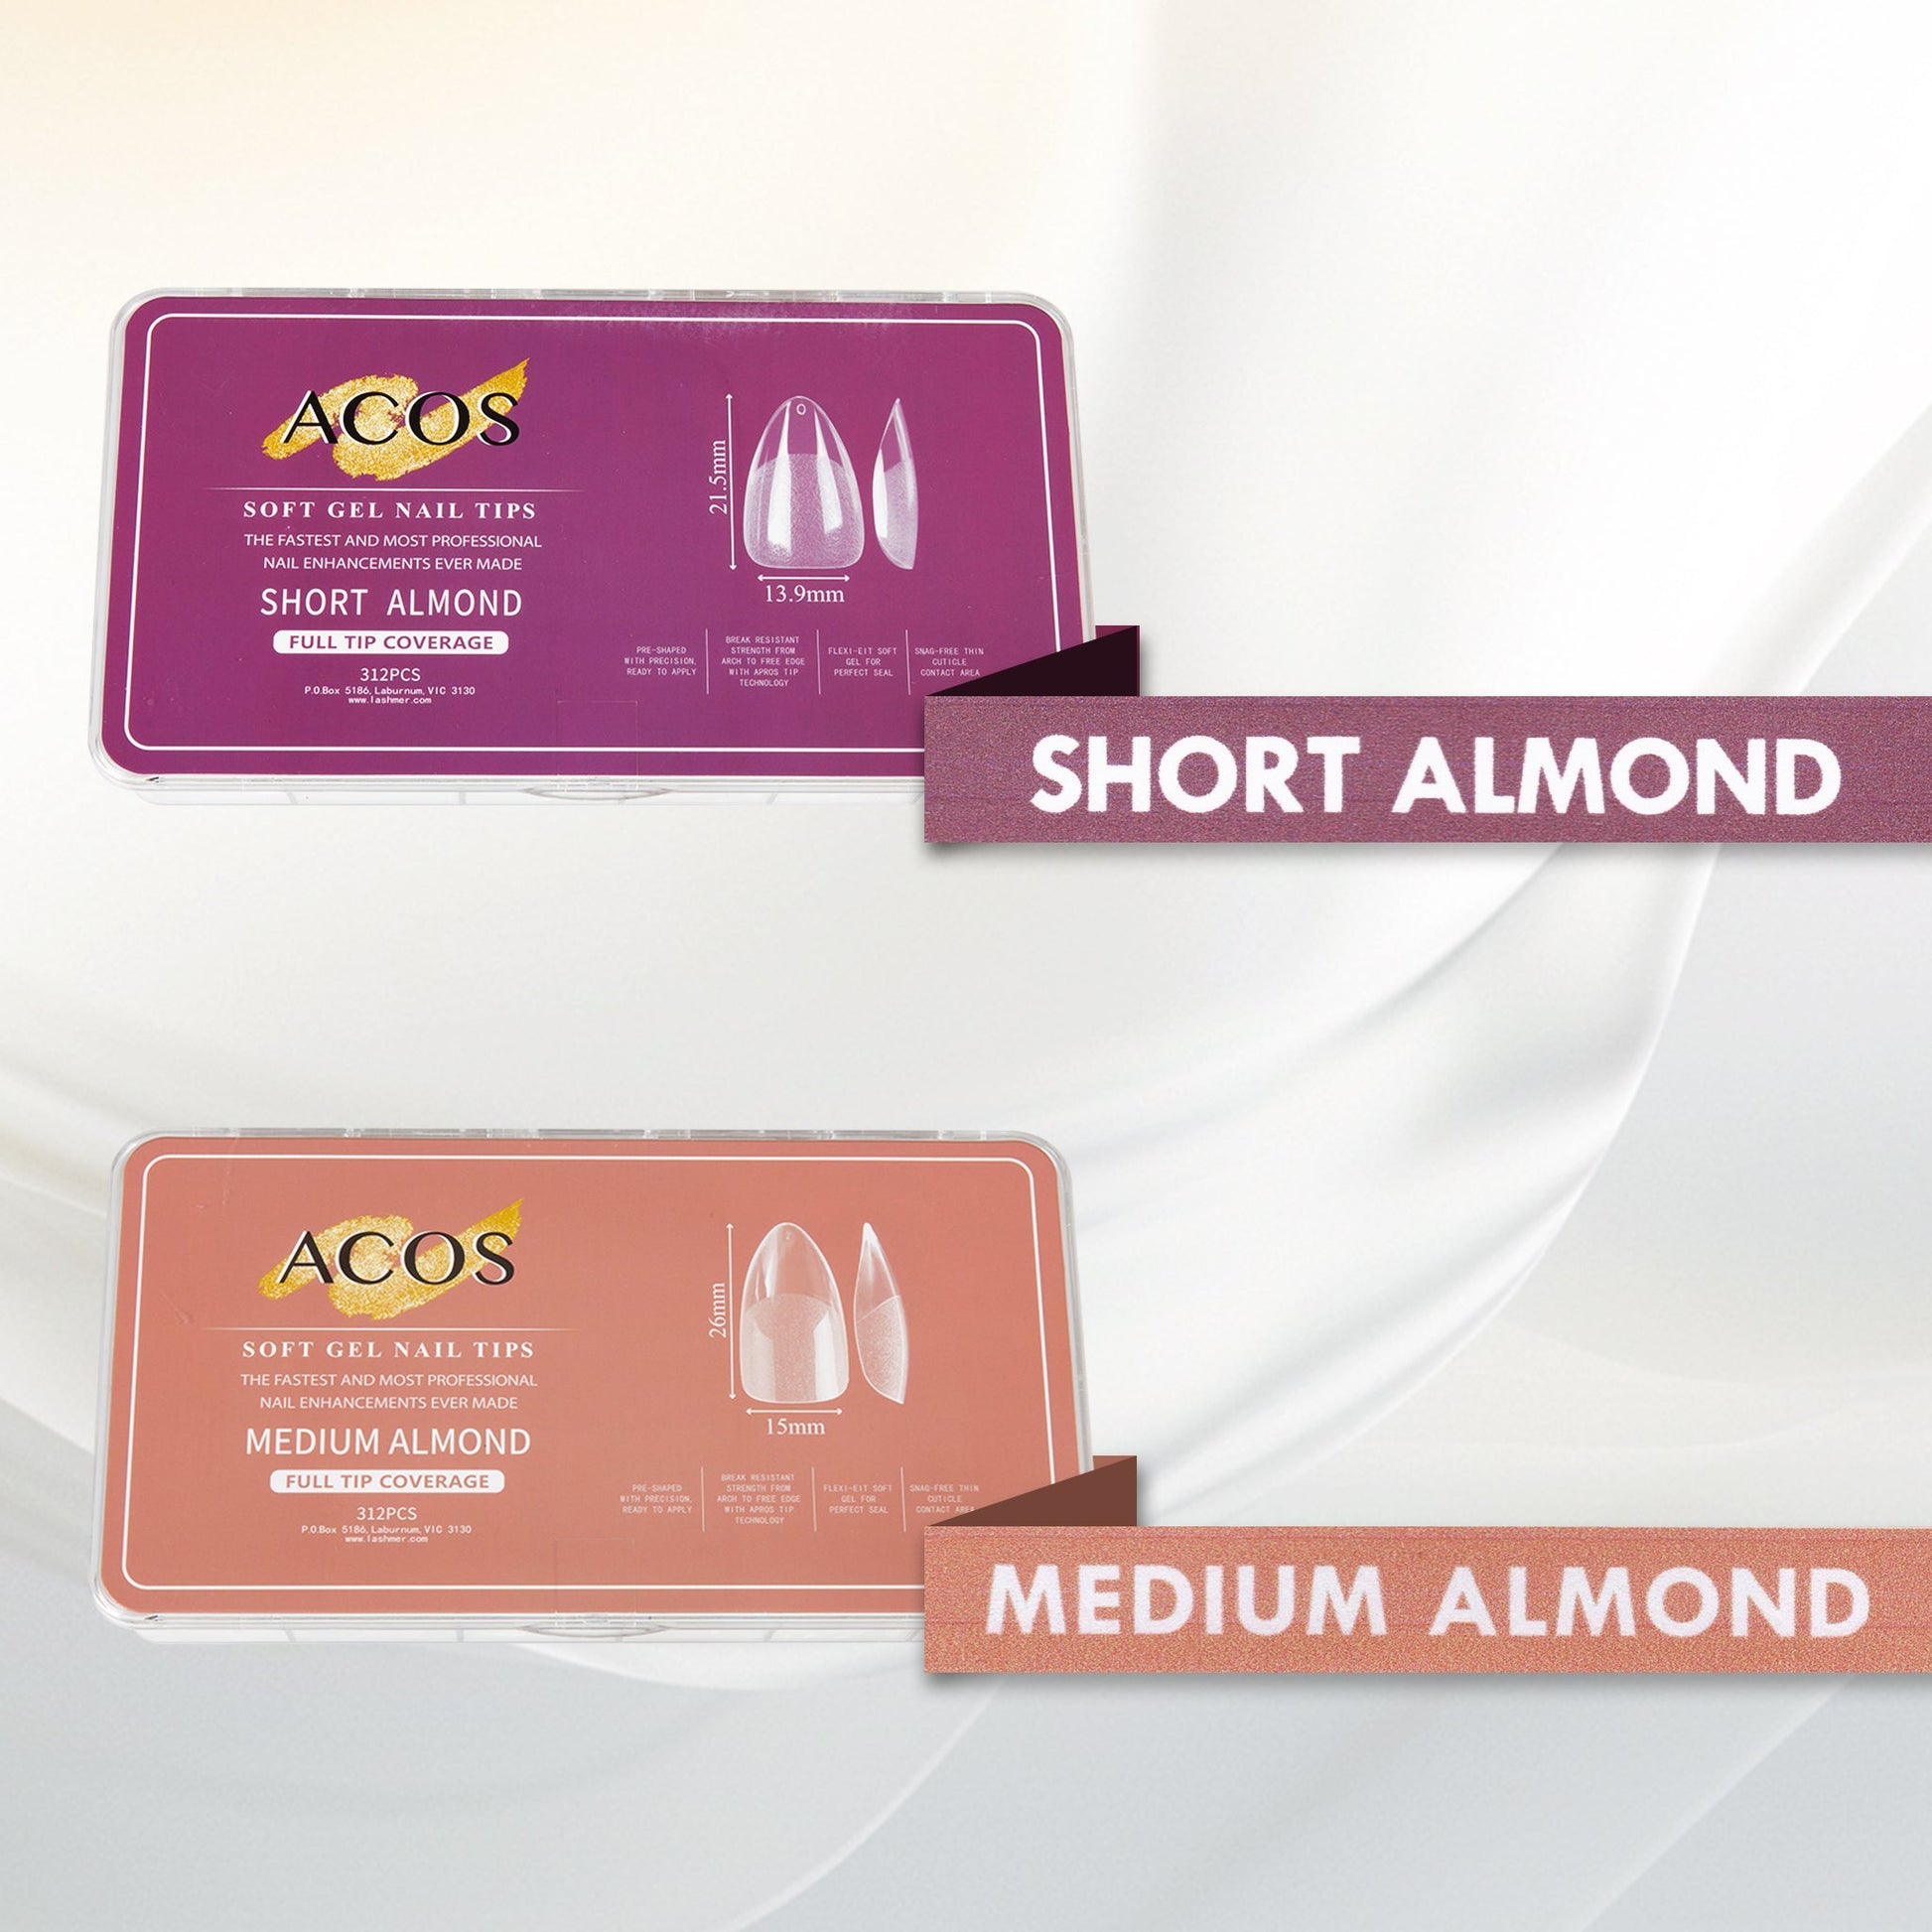 ACOS Soft Gel Nail Tips (Full Tip Coverage) - ALMOND Shape (312pcs/box) - Lashmer